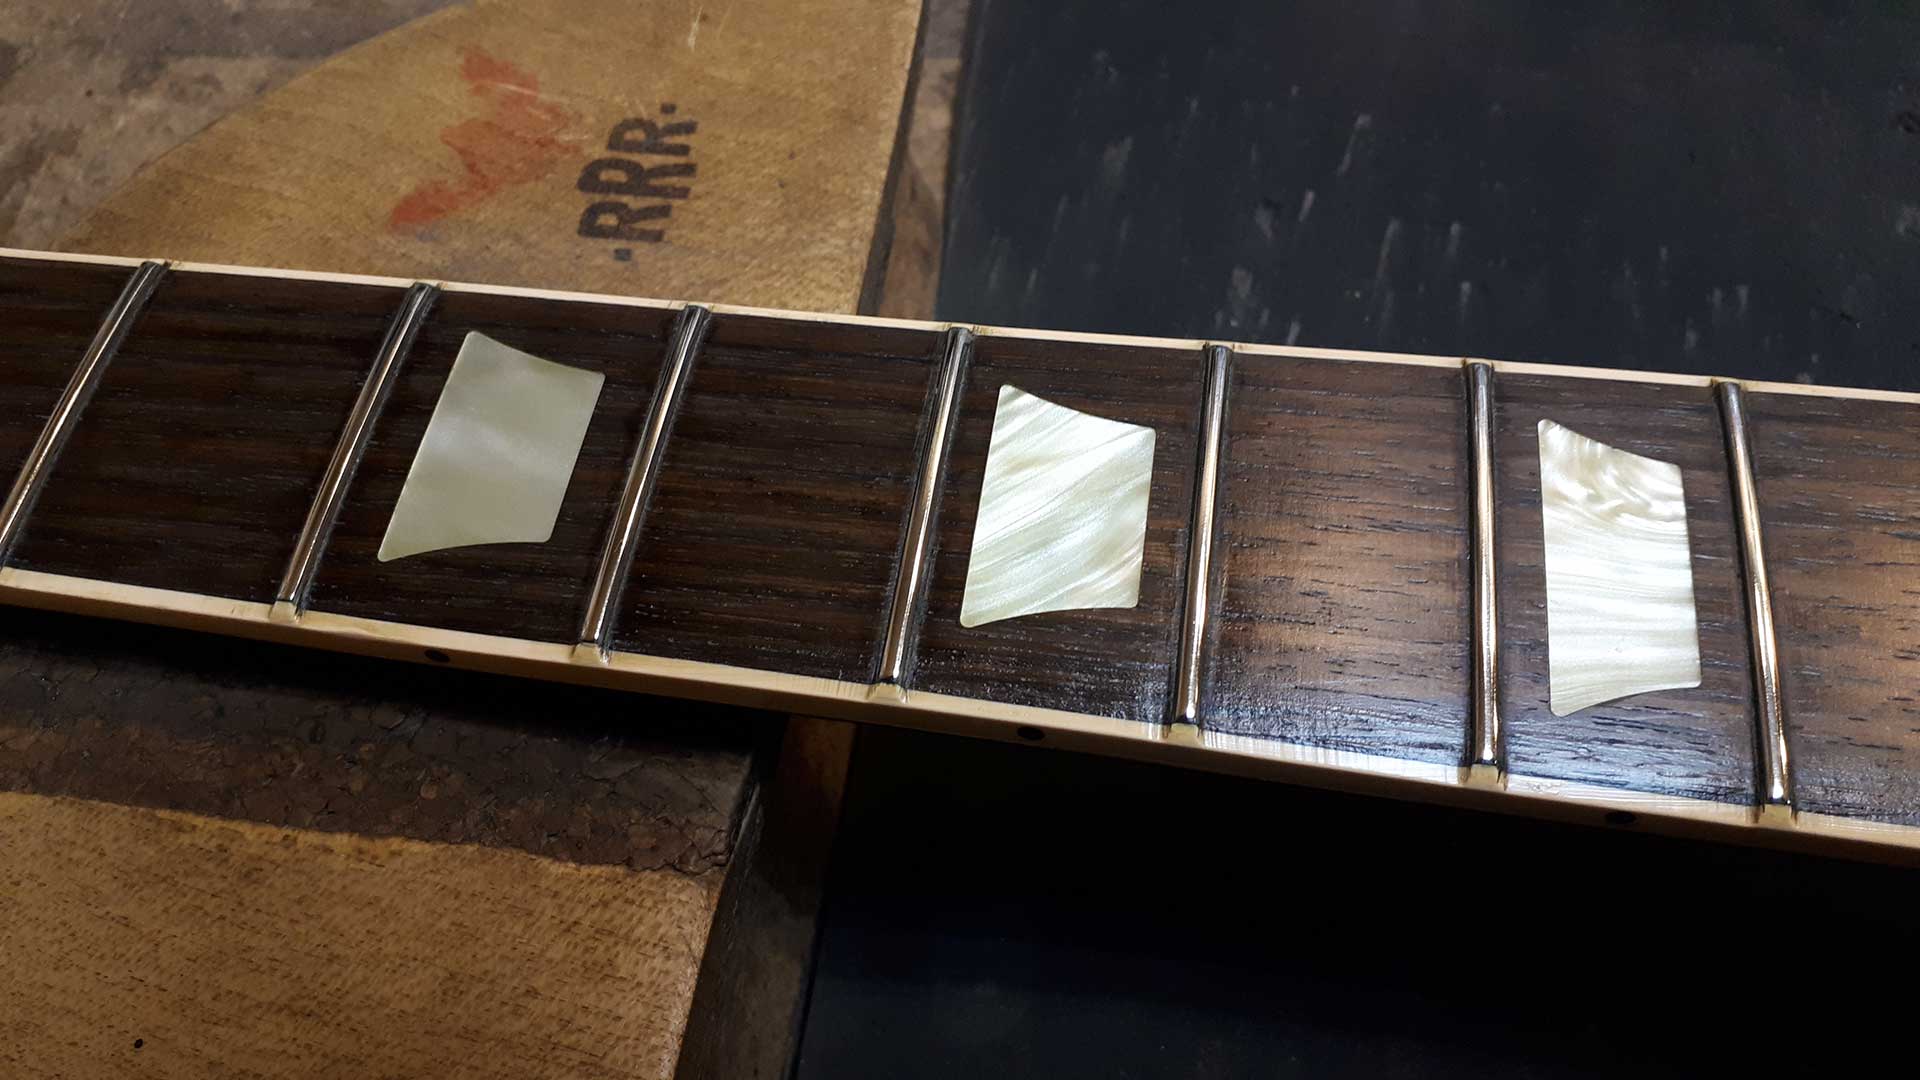 Gibson Les Paul Planification Full setup